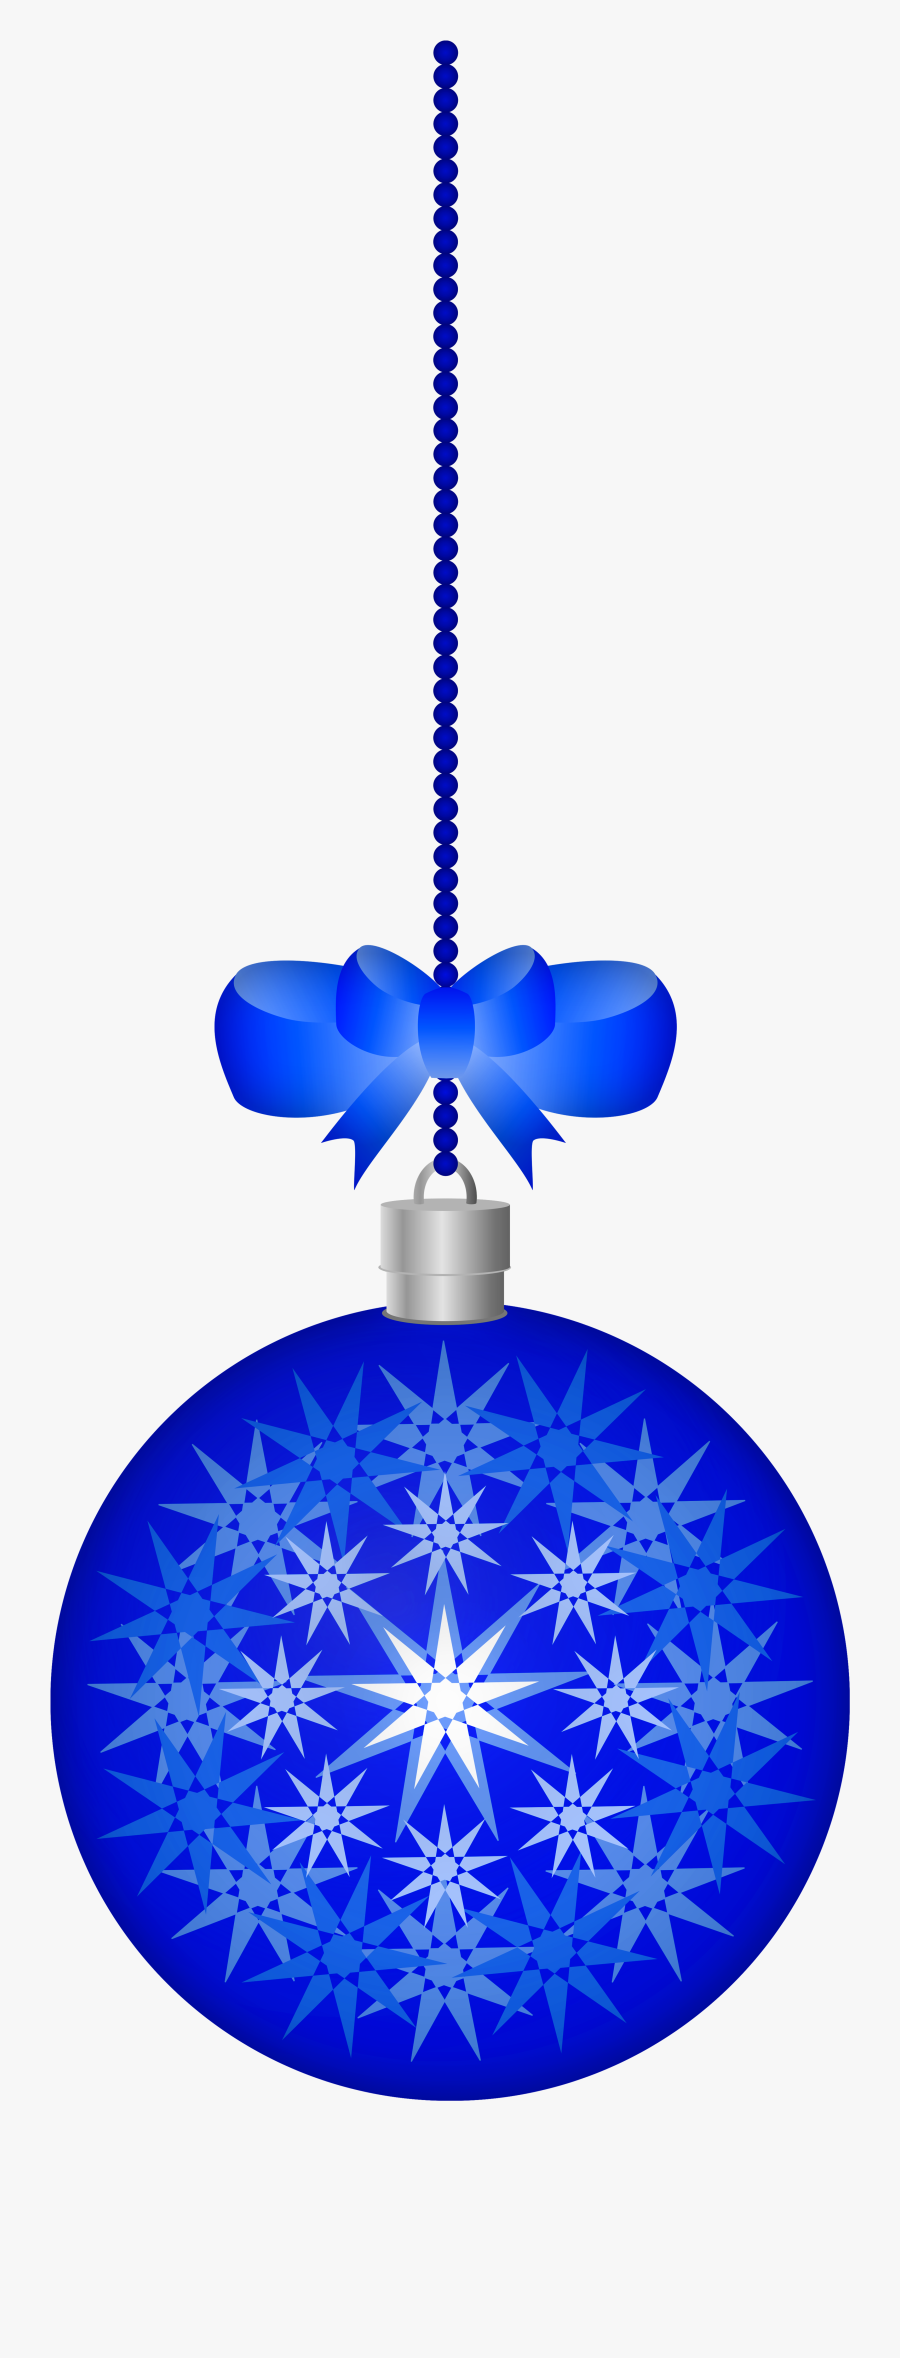 Transparent Christmas Symbol Png , Free Transparent Clipart - ClipartKey